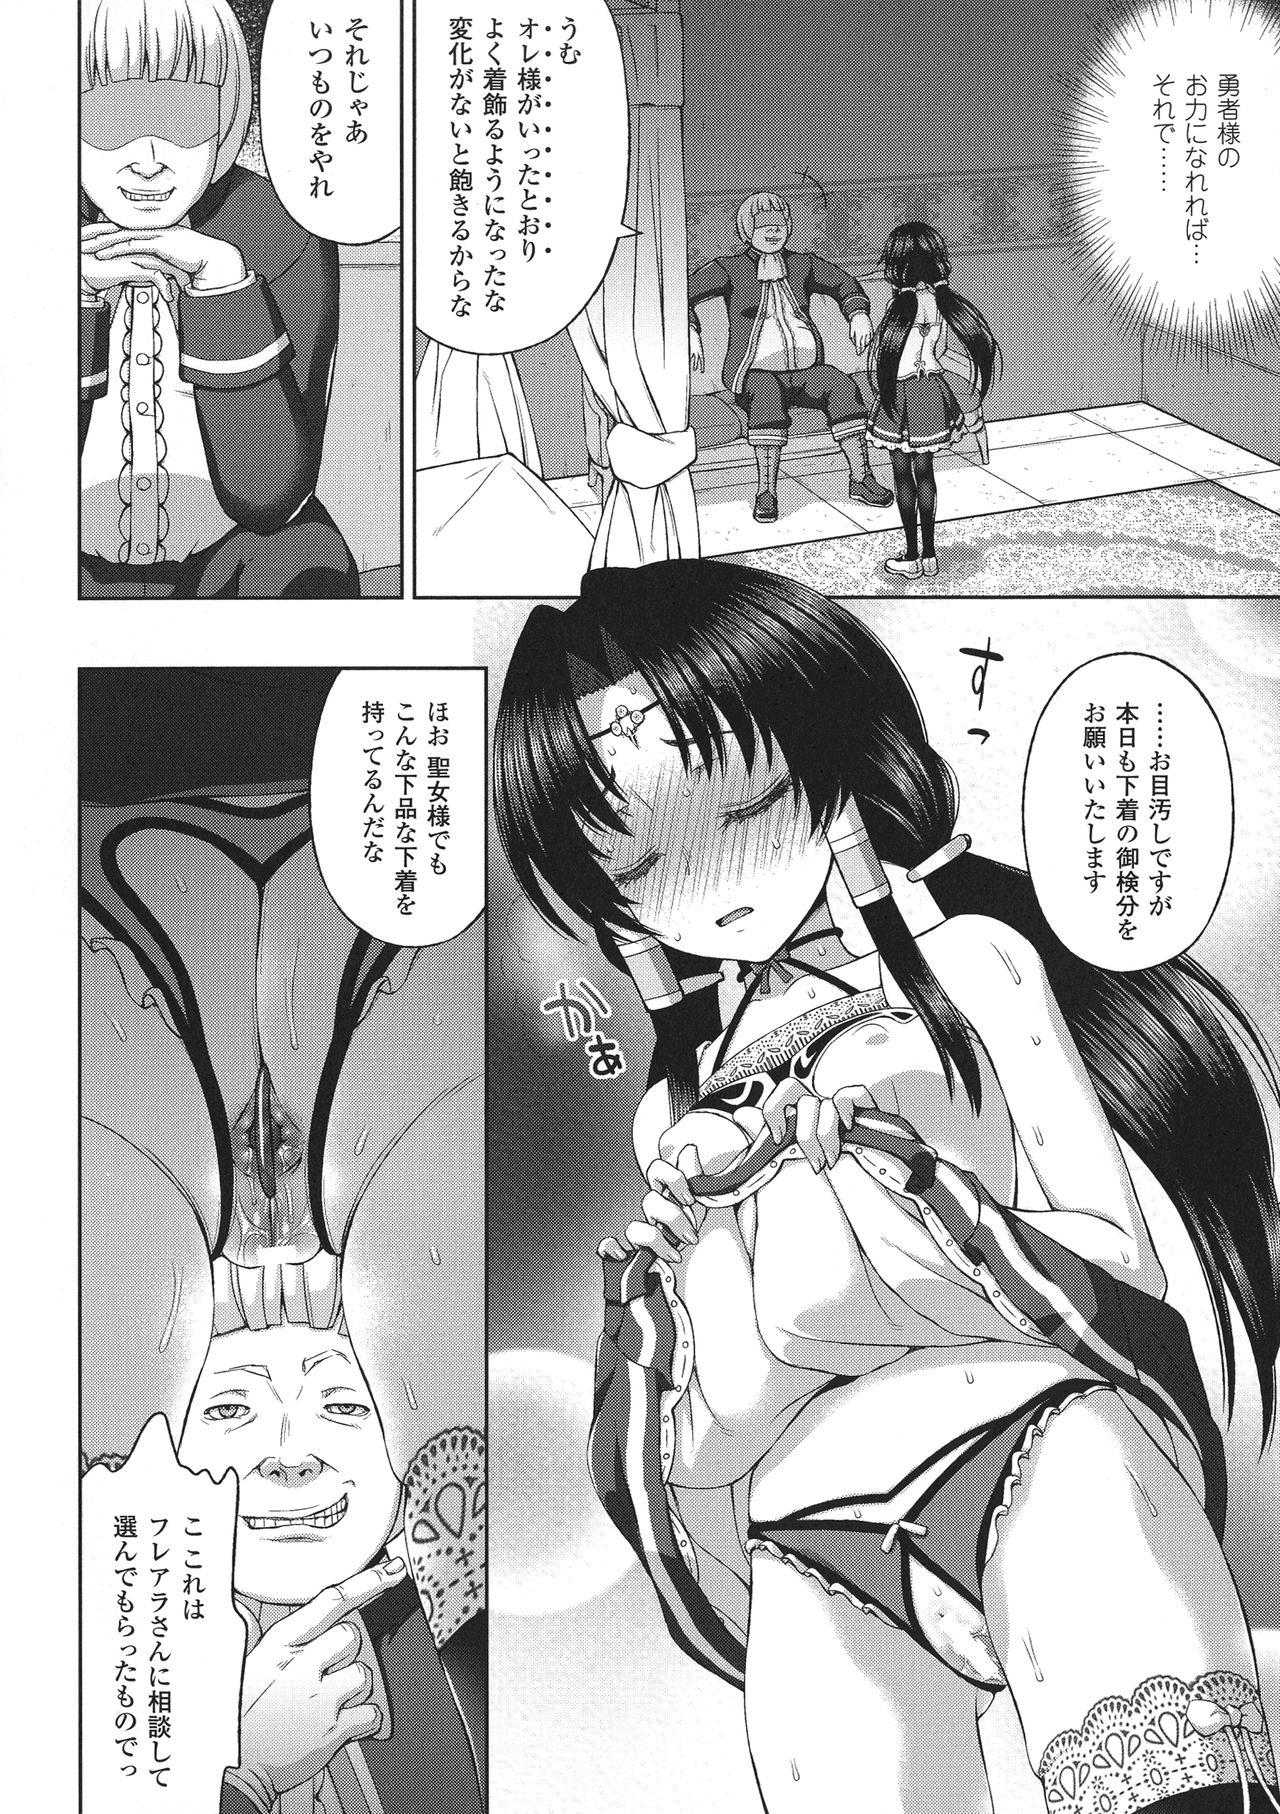 Seigi no Heroine Kangoku File DX Vol. 8 71